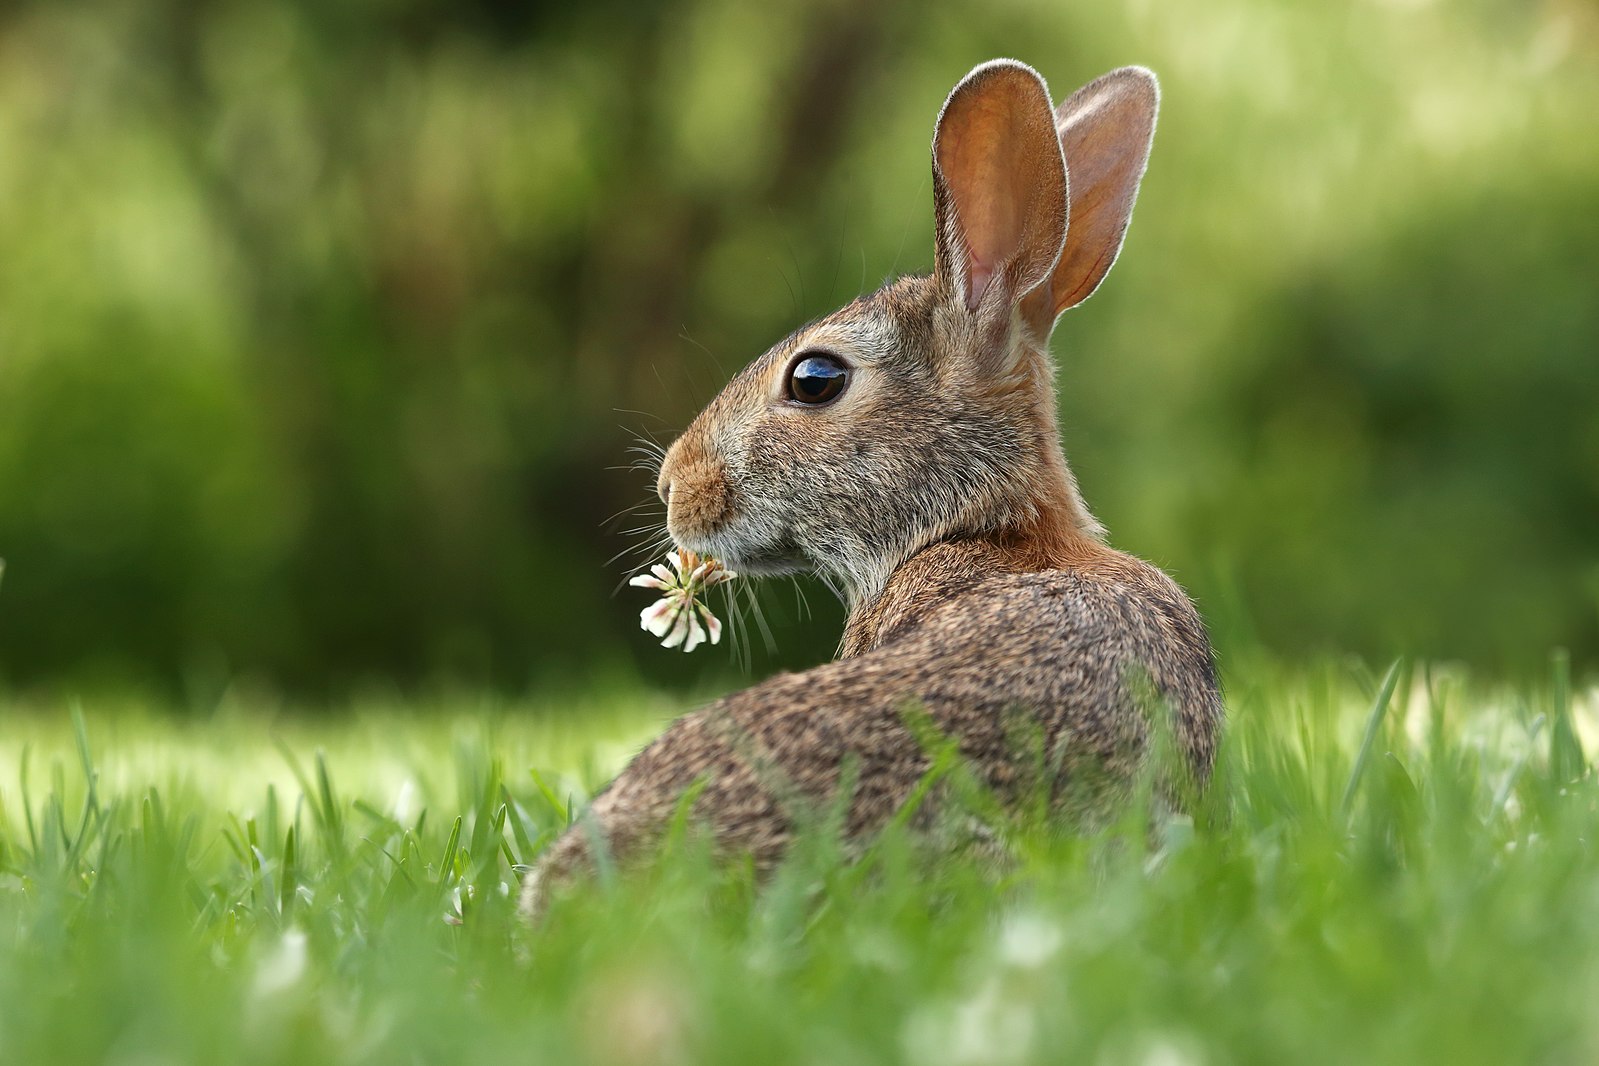 rabbit in a field nibbling on a flower